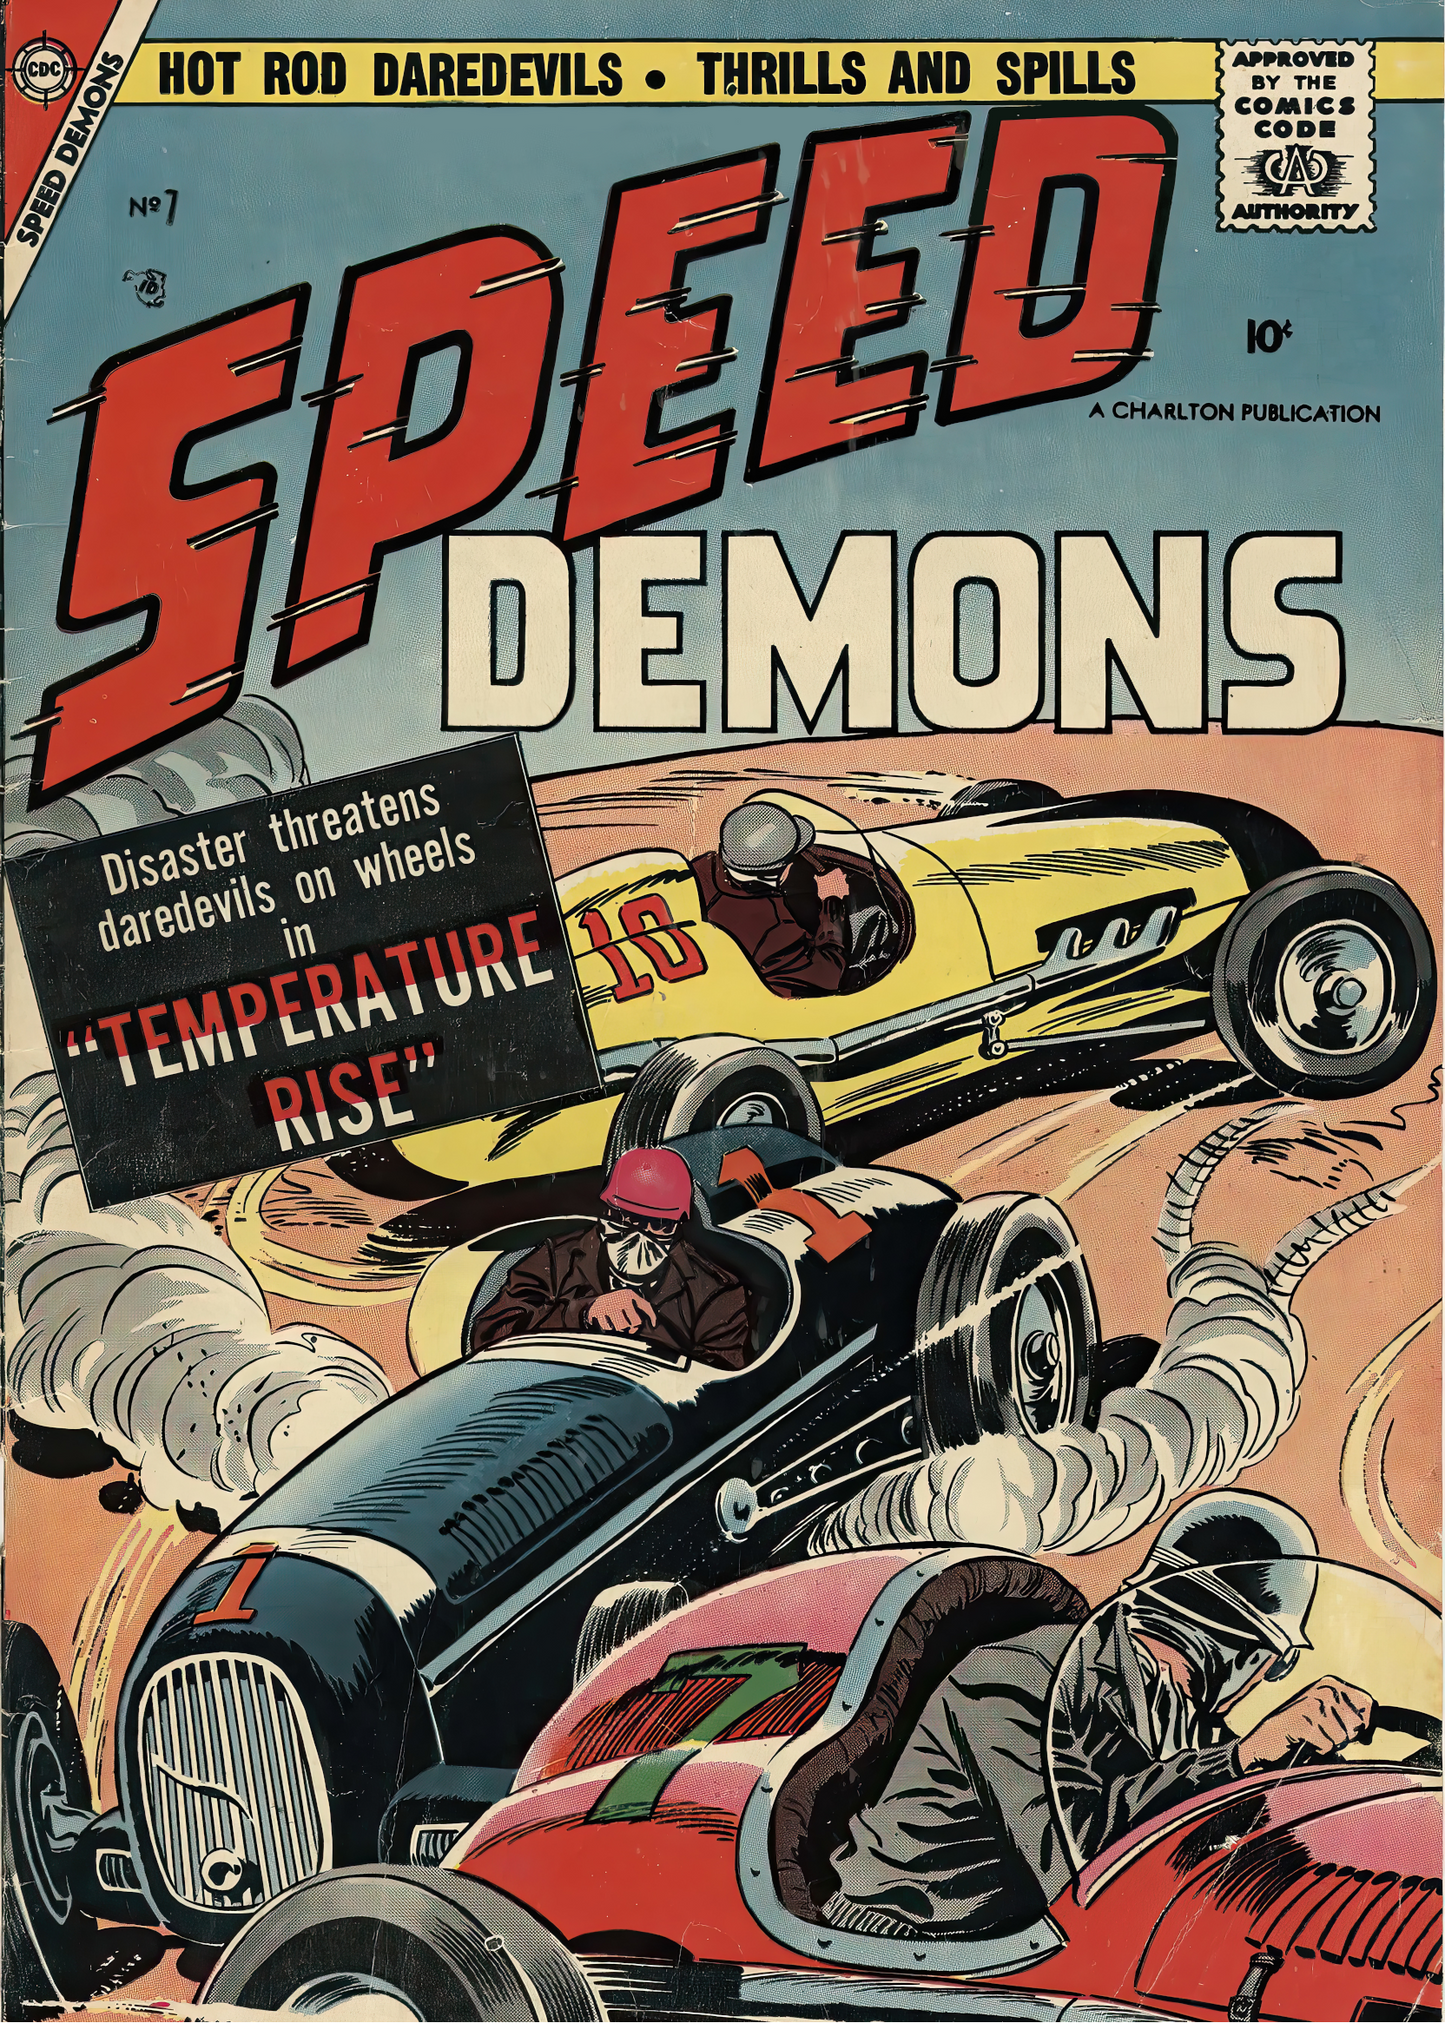 #993 Speed Demons #7